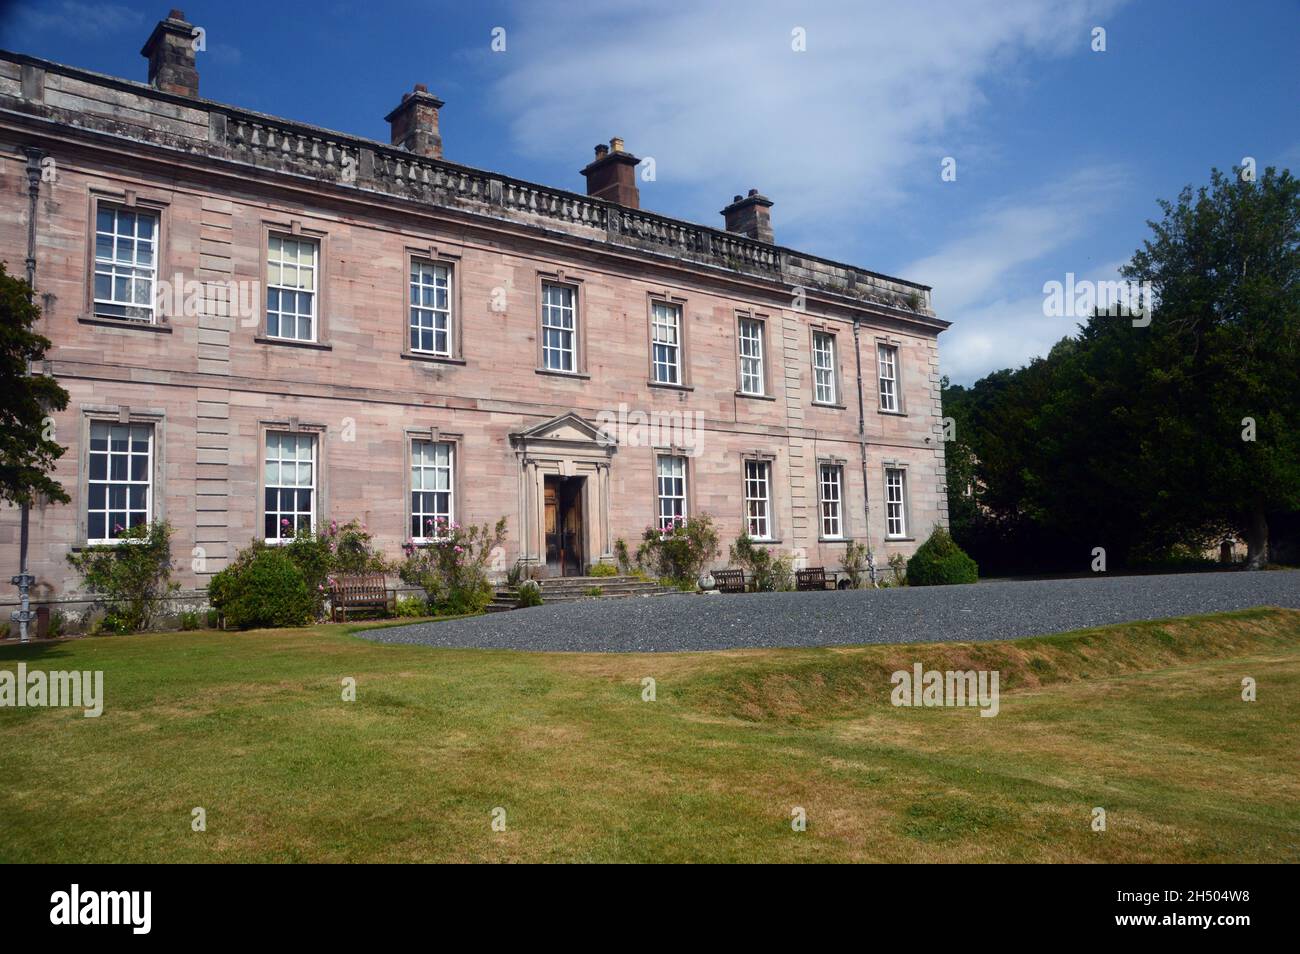 Dalemain Mansion & Historic Gardens, près d'Ullswater, Lake District National Park, Cumbria, Angleterre, Royaume-Uni. Banque D'Images